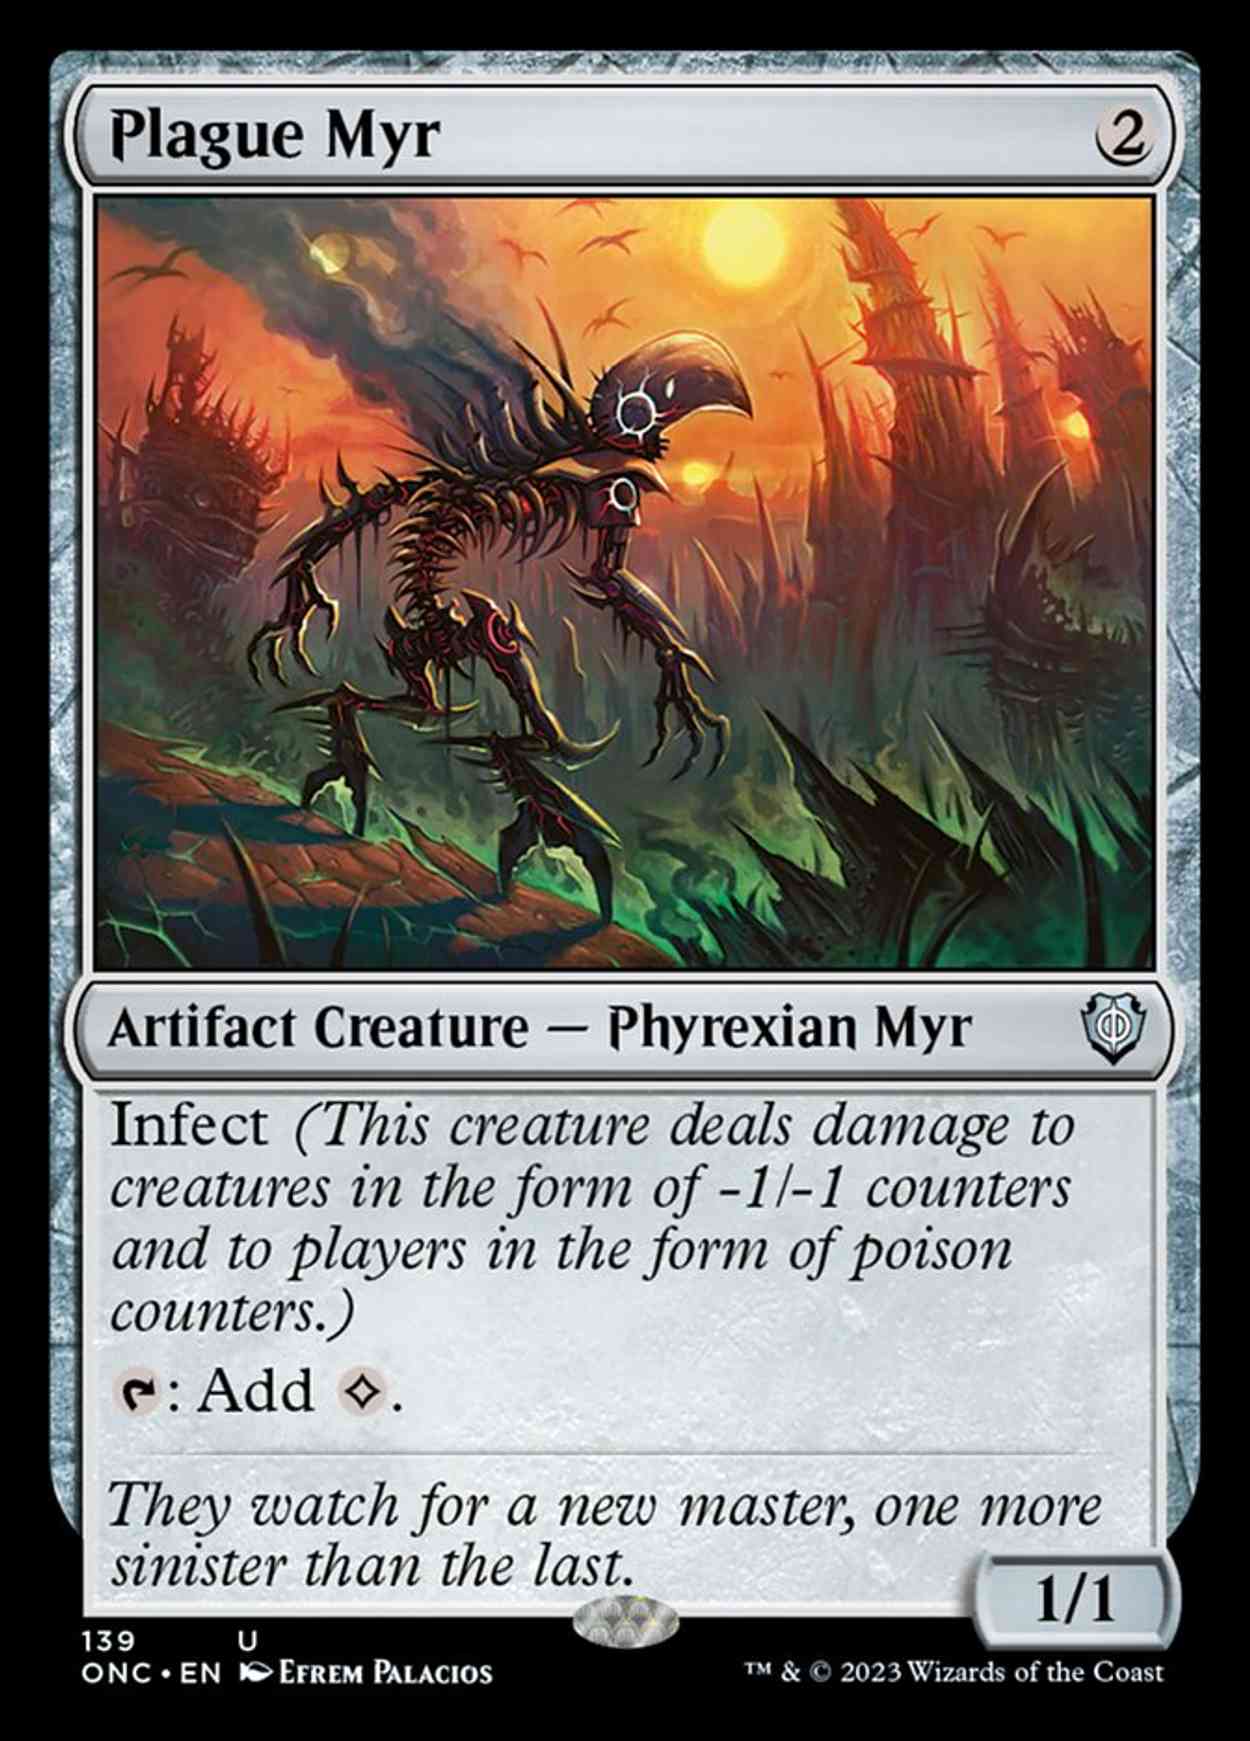 Plague Myr magic card front